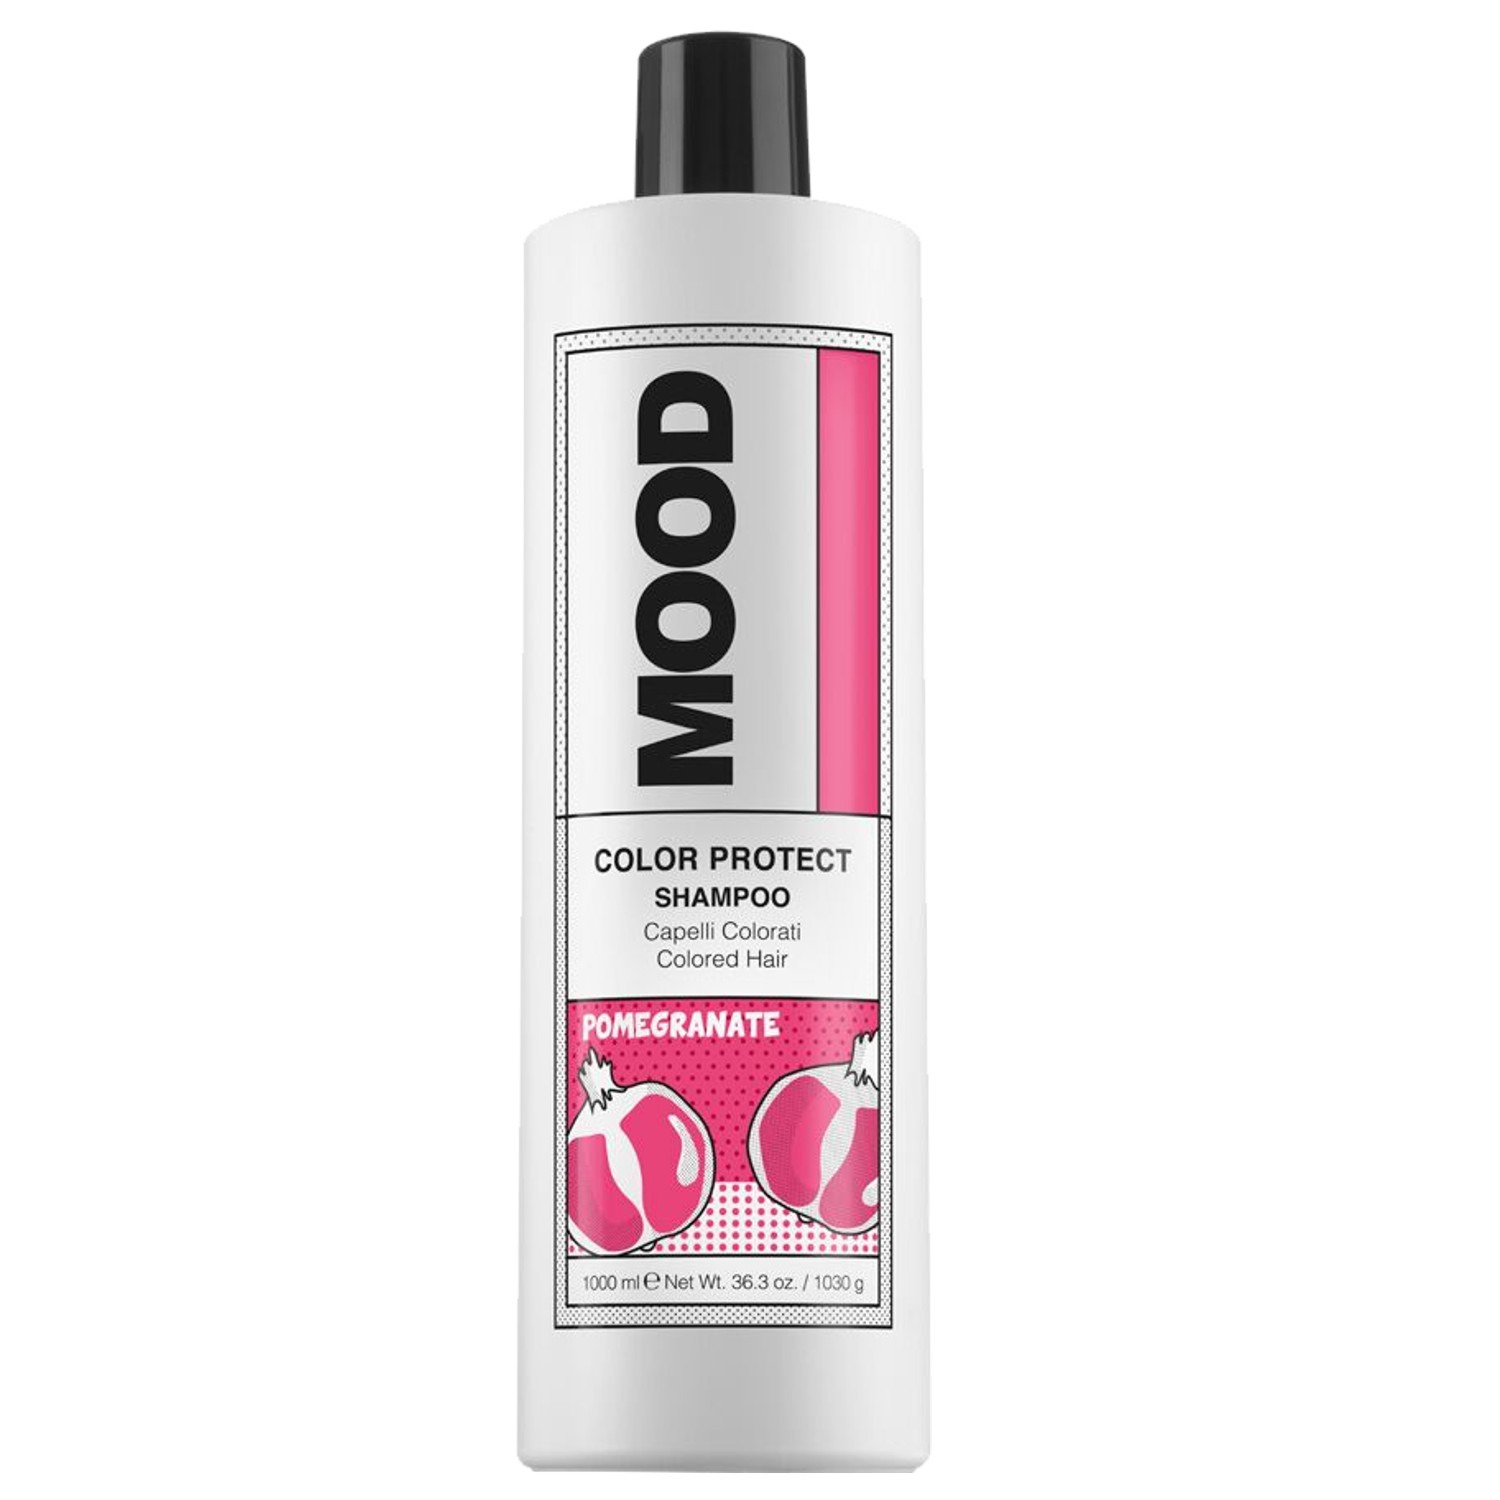 MOOD Color Protect Shampoo 1 L